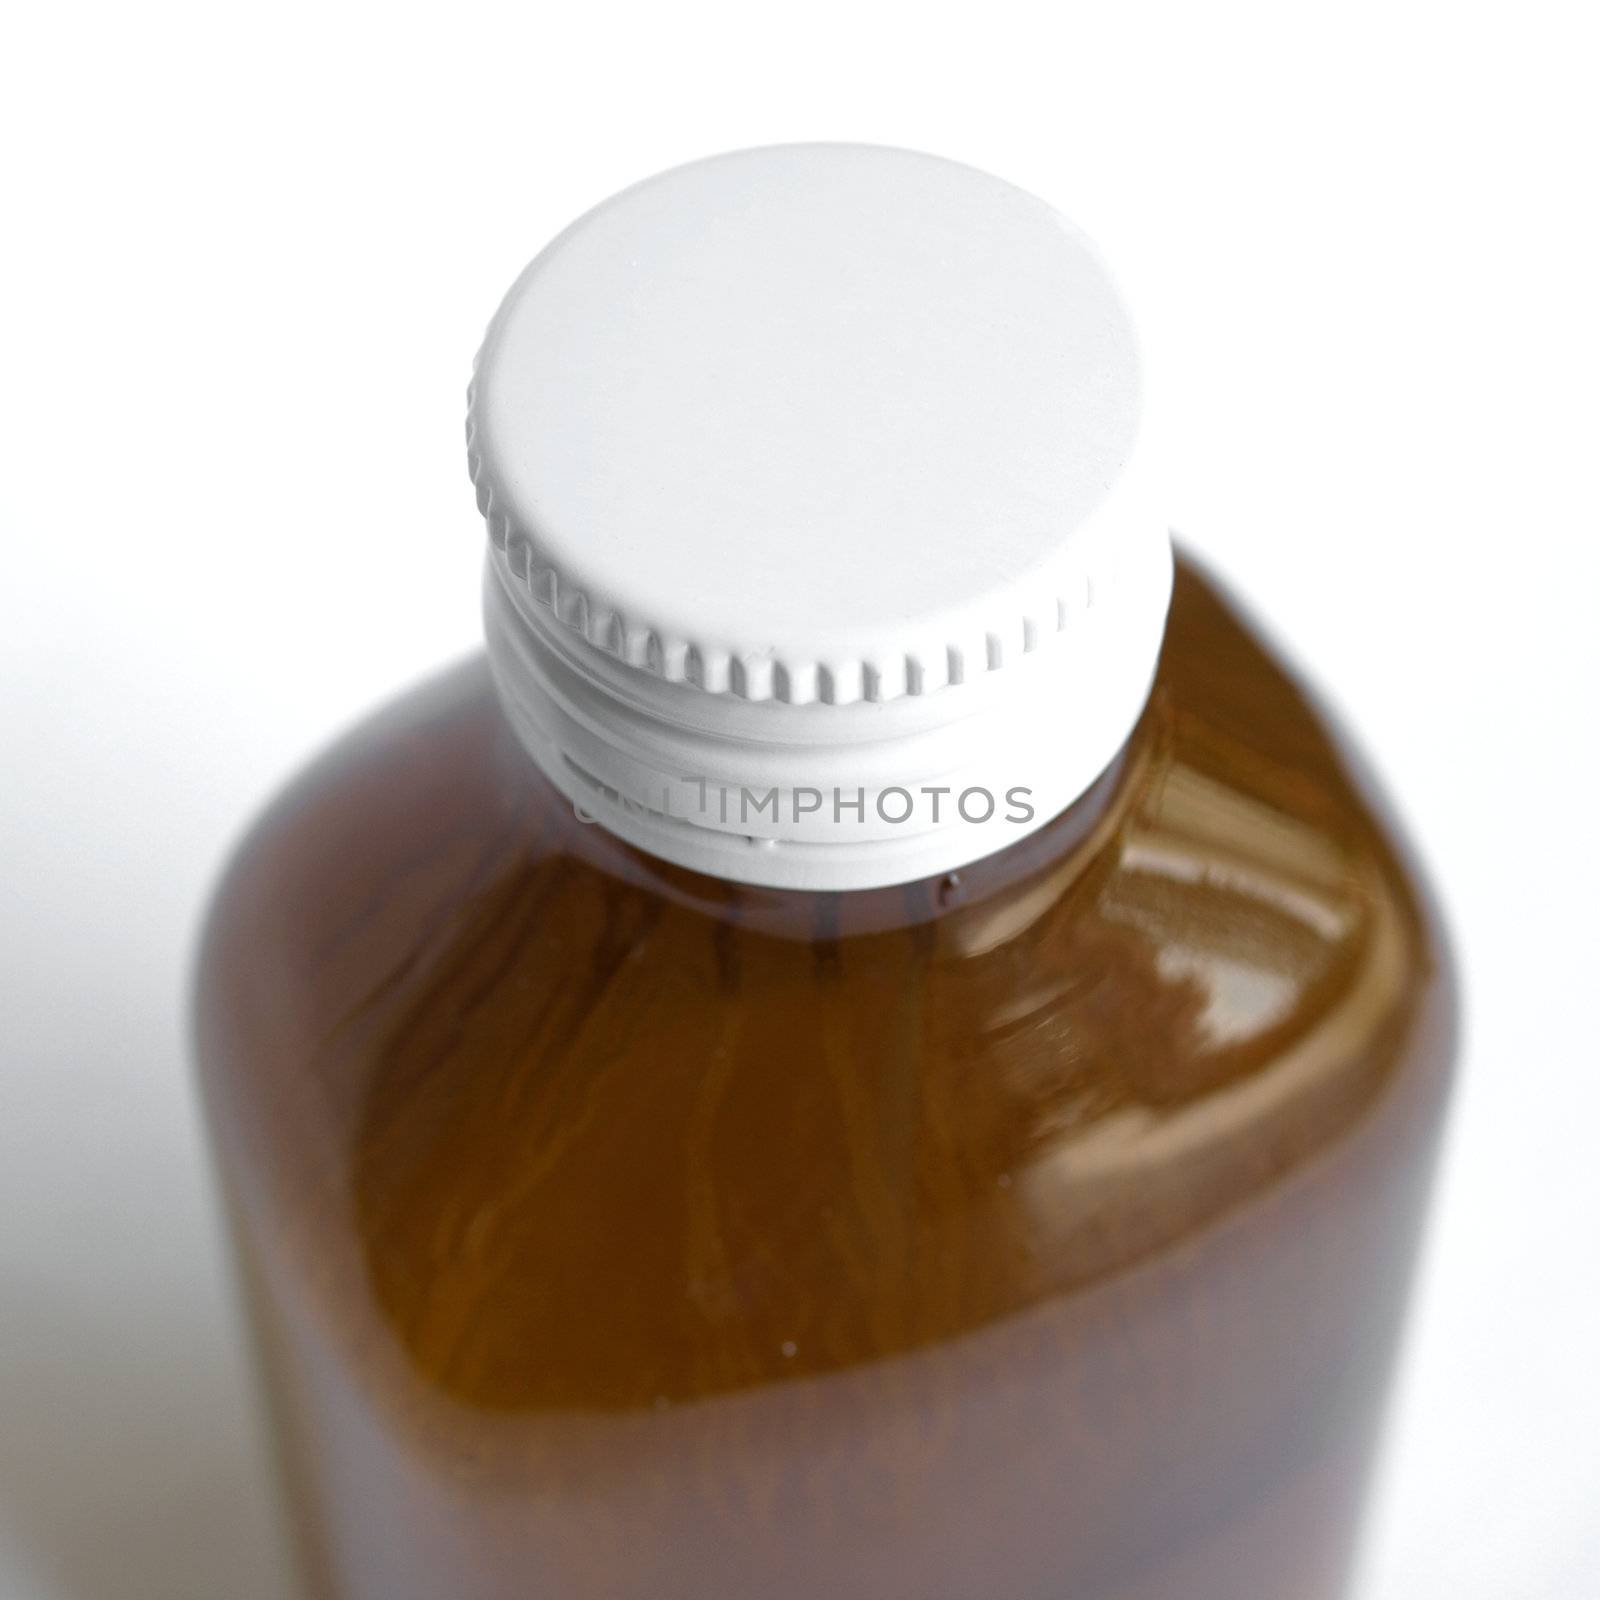 Syrup sugar flavoured liquid medicine for cough or flu